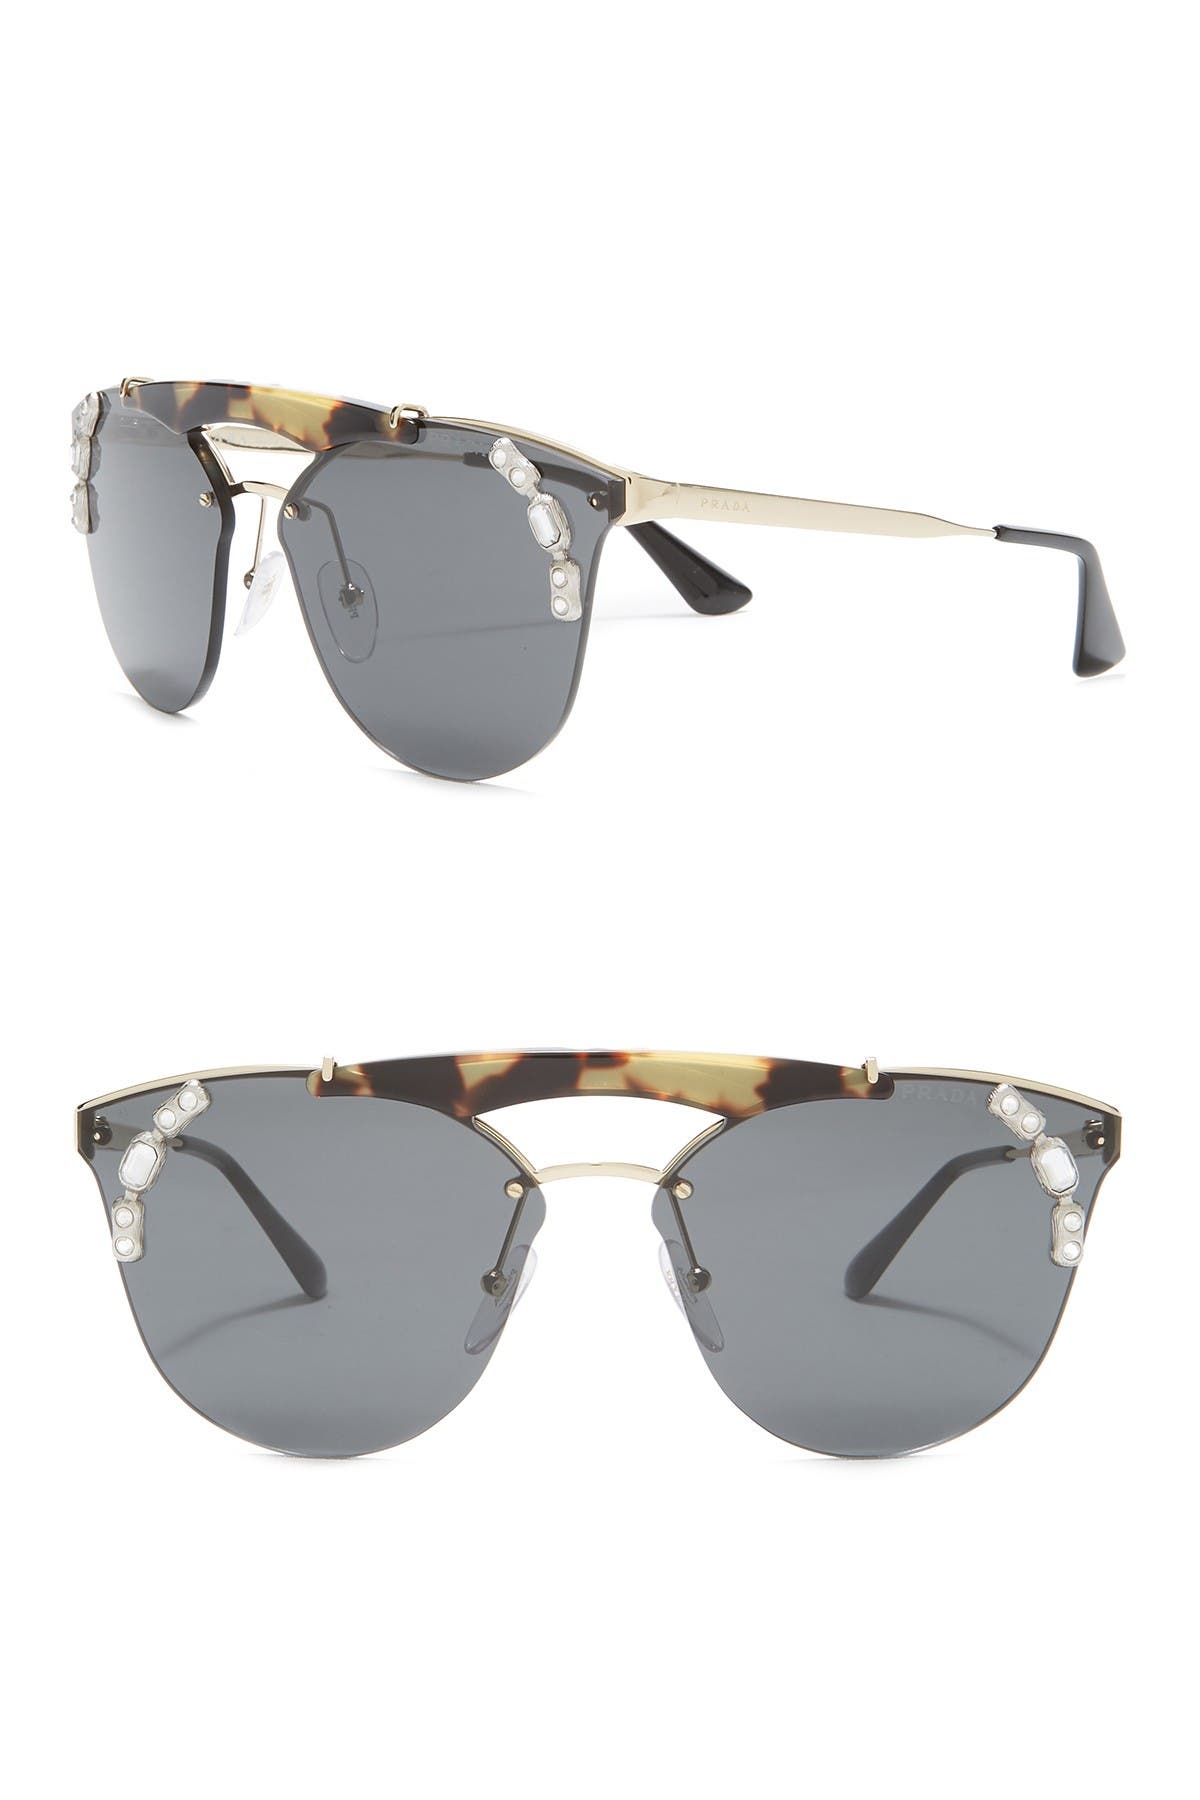 Prada | 53mm Square Sunglasses | Nordstrom Rack